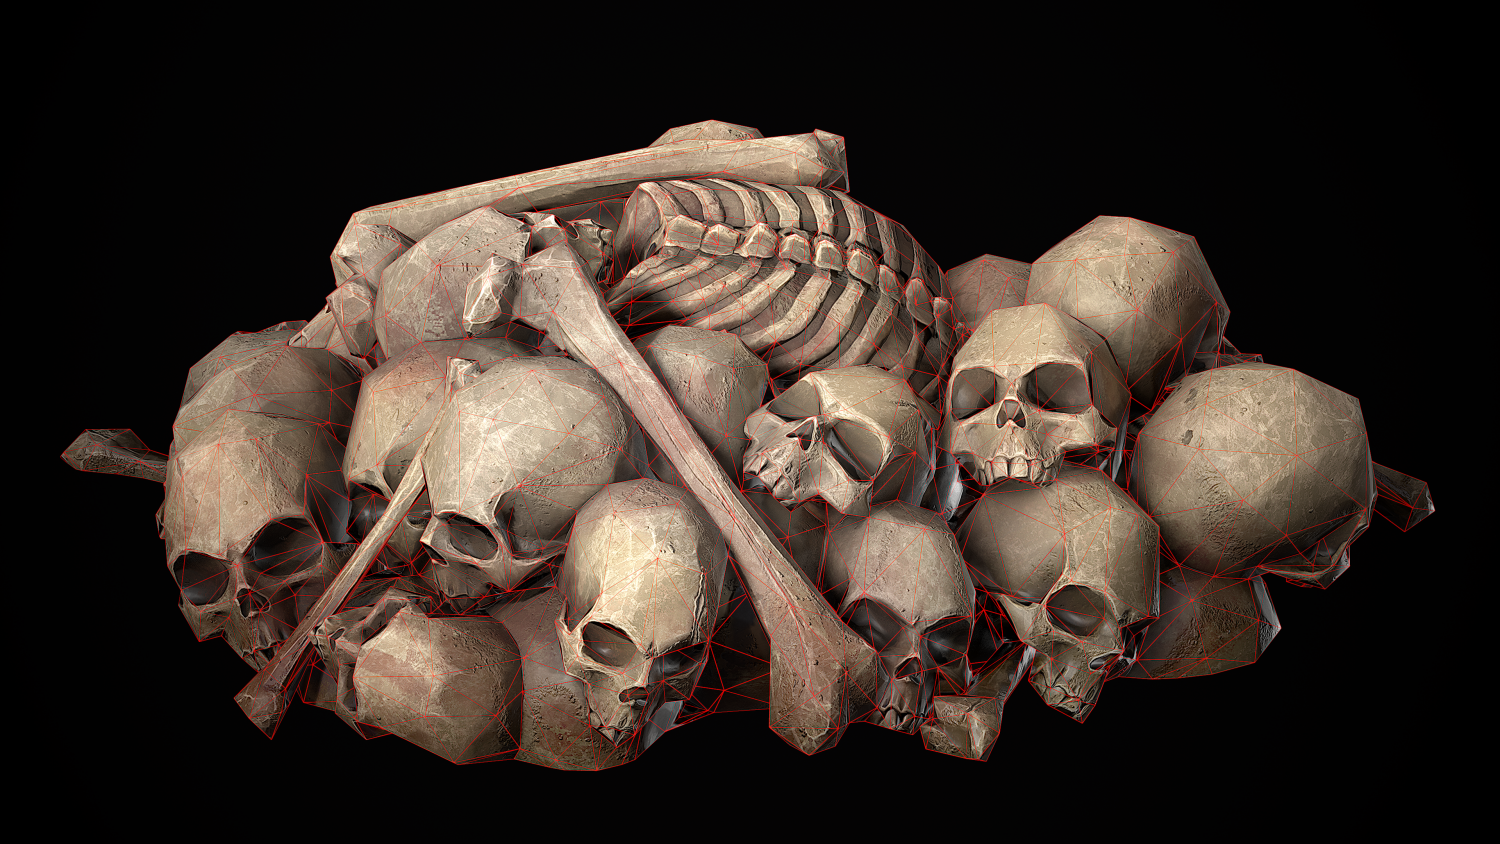 3d model Bone. 3д модель кости. Кость 3д. Текстура скелета. Bones full